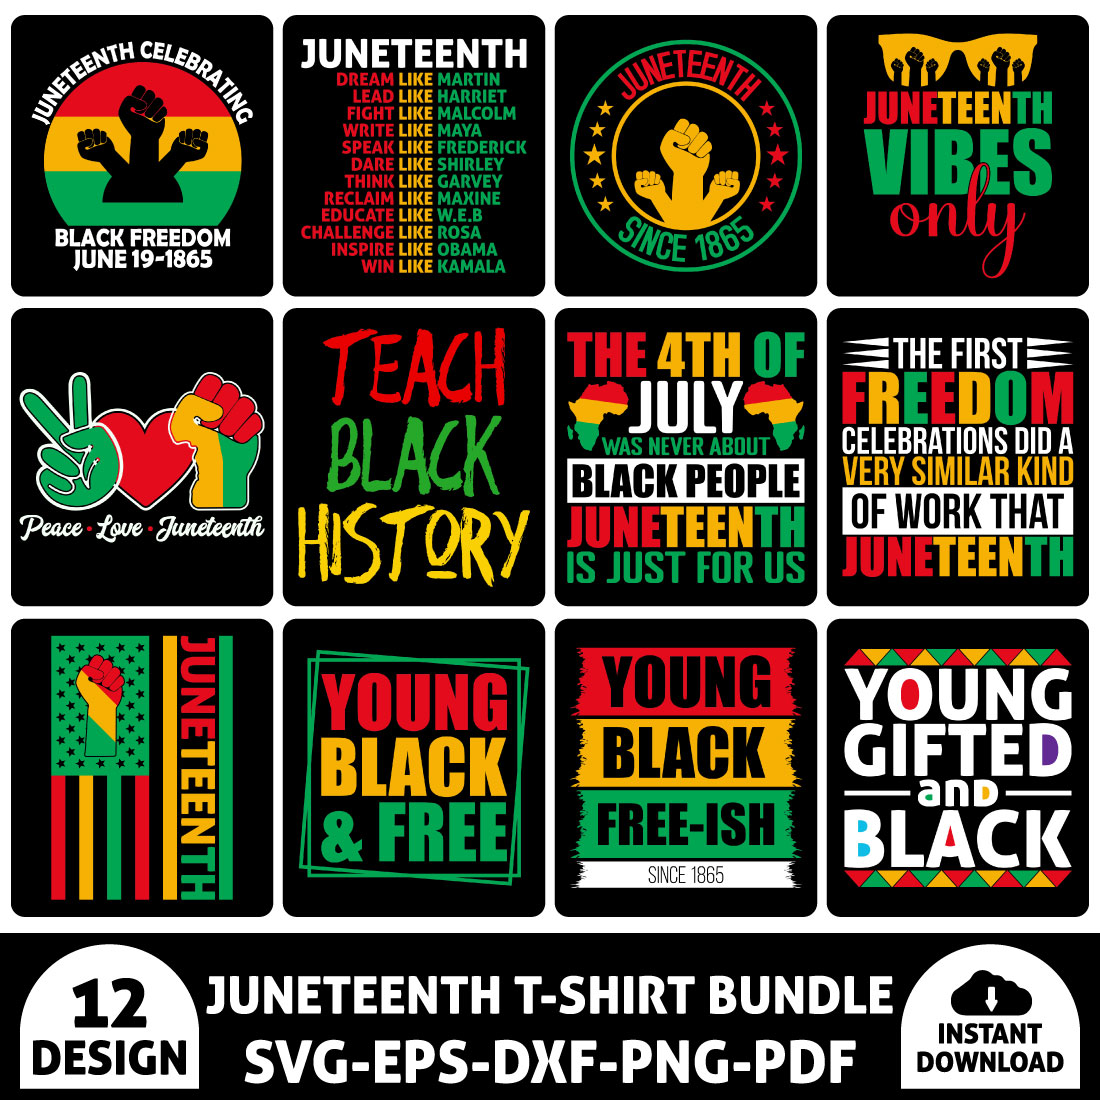 Juneteenth T-Shirt Bundle Vol 1 cover image.